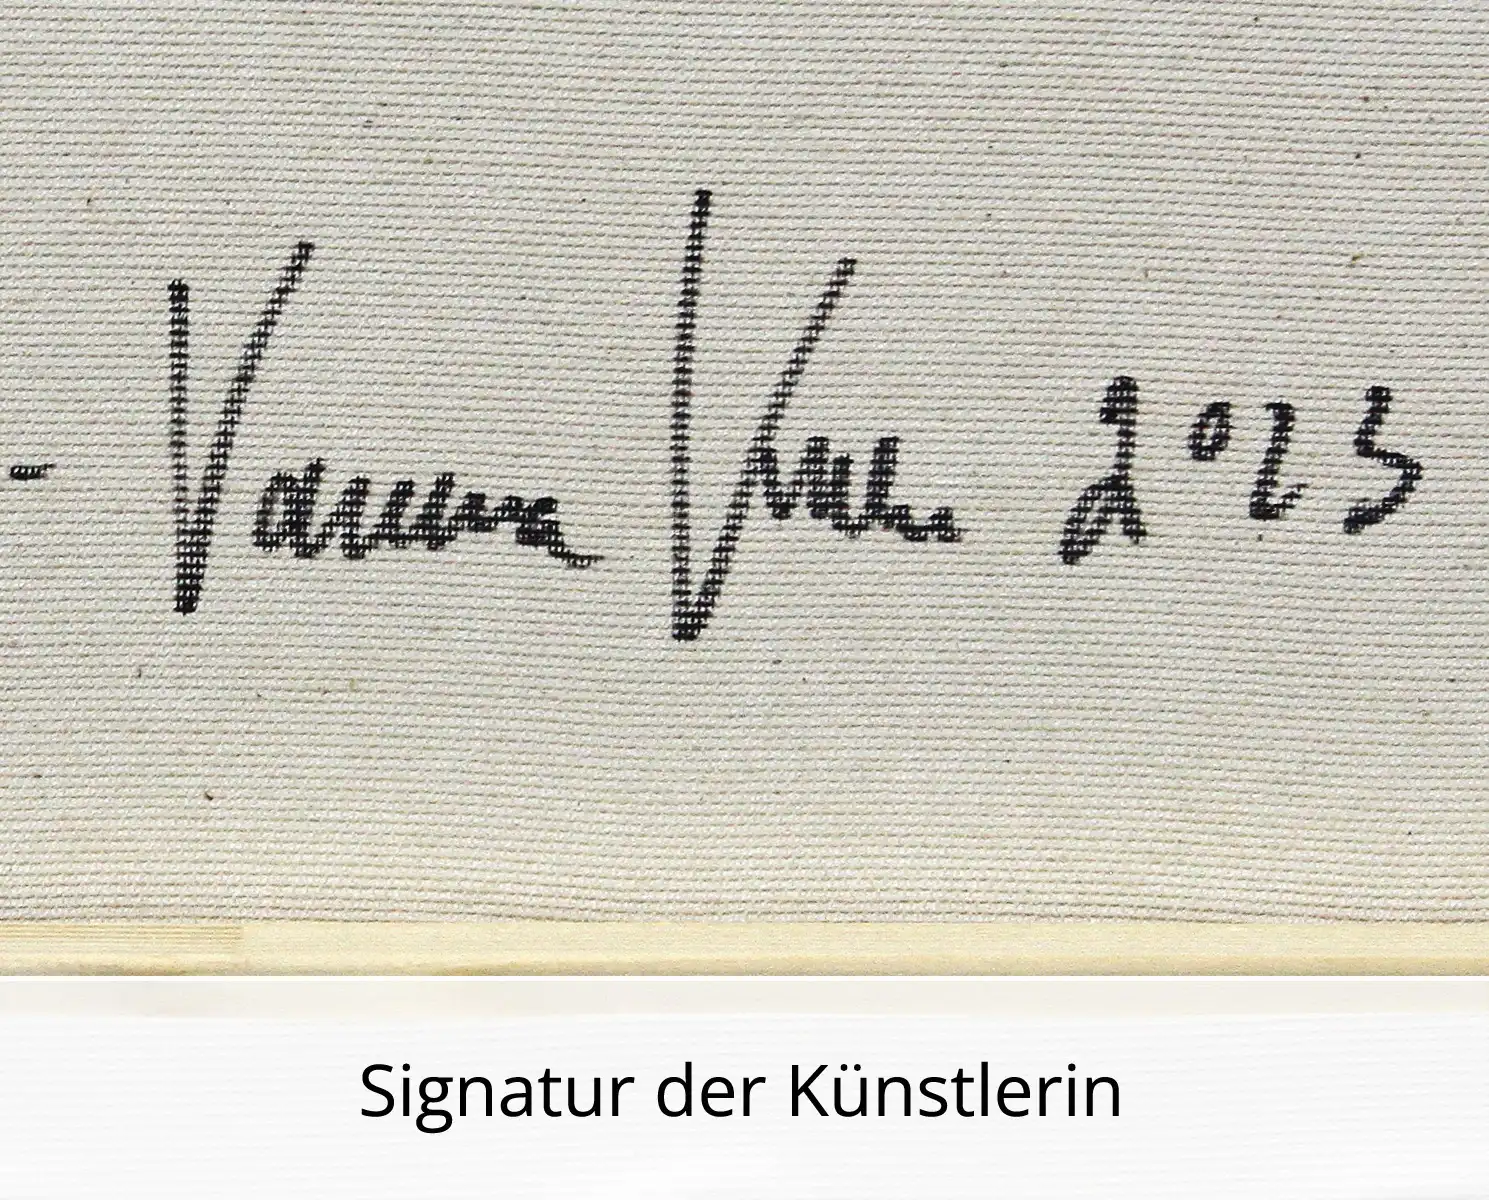 V. Kuhn: "Never enough", Originalgemälde (Unikat)